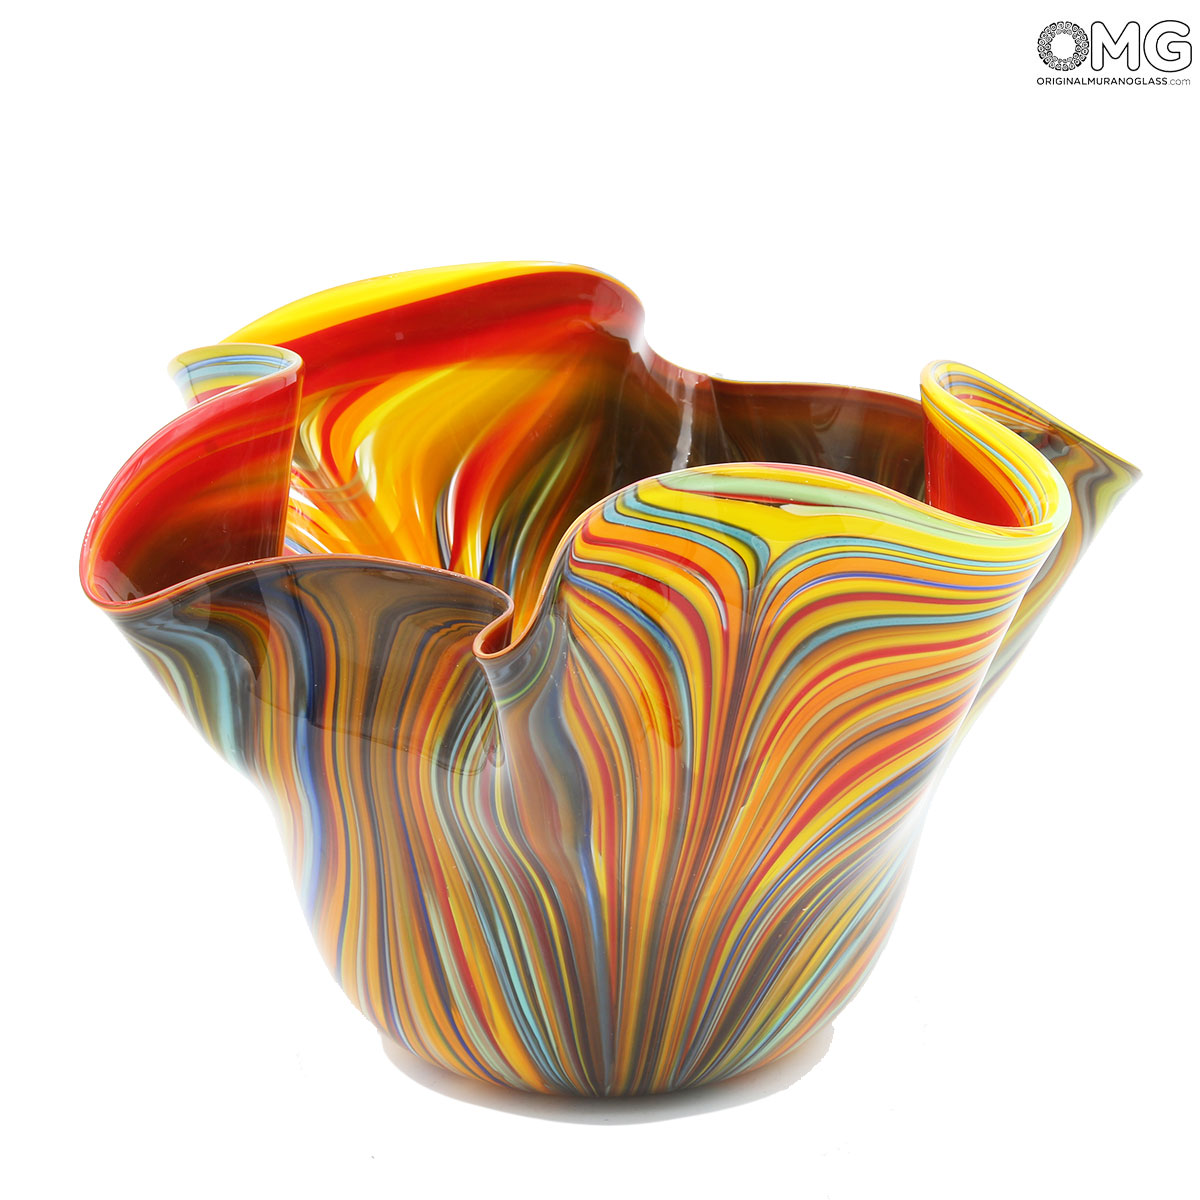 Melodieus Menda City verkenner Missoni Bowl Centerpiece - Multicolor - Original Murano Glass OMG®